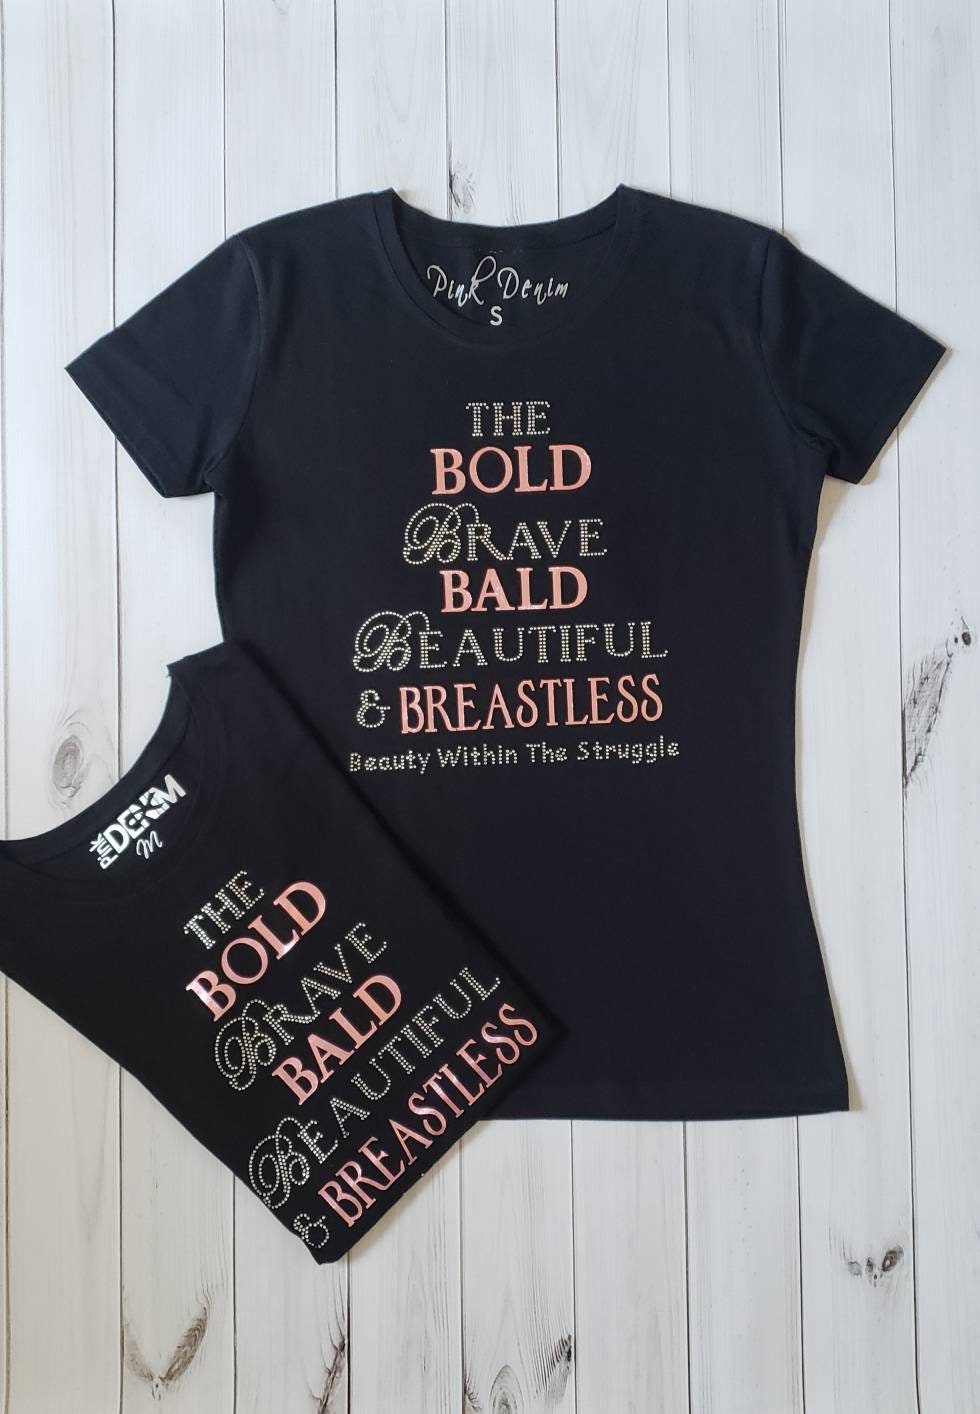 The Bold Brave Bald Beautiful and Breastless Rhinestone & Foil Tee